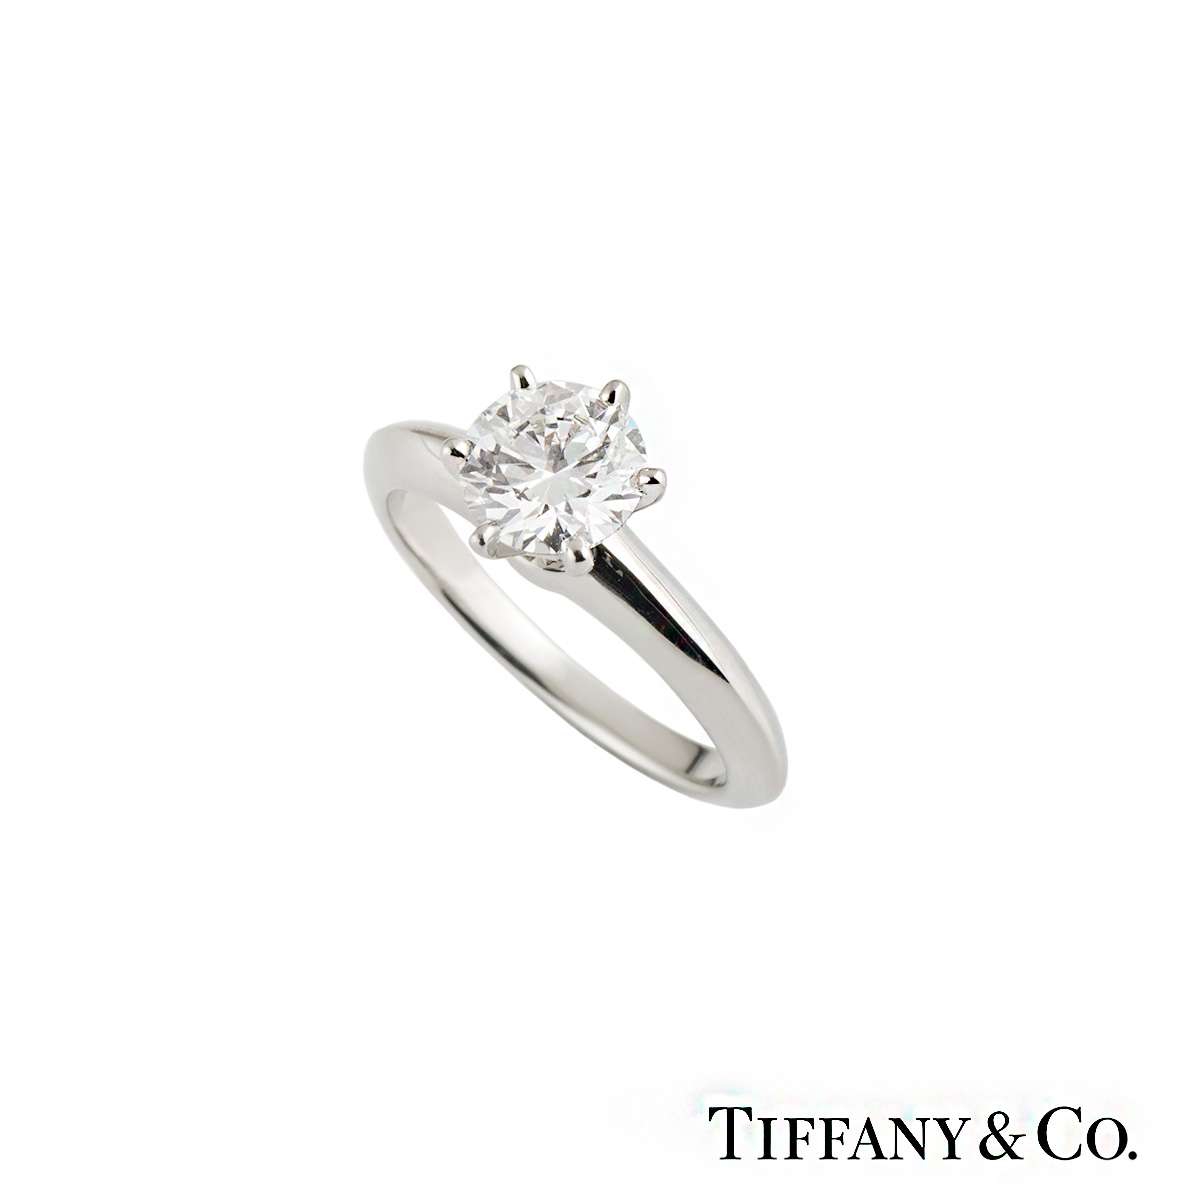 tiffany's round brilliant ring